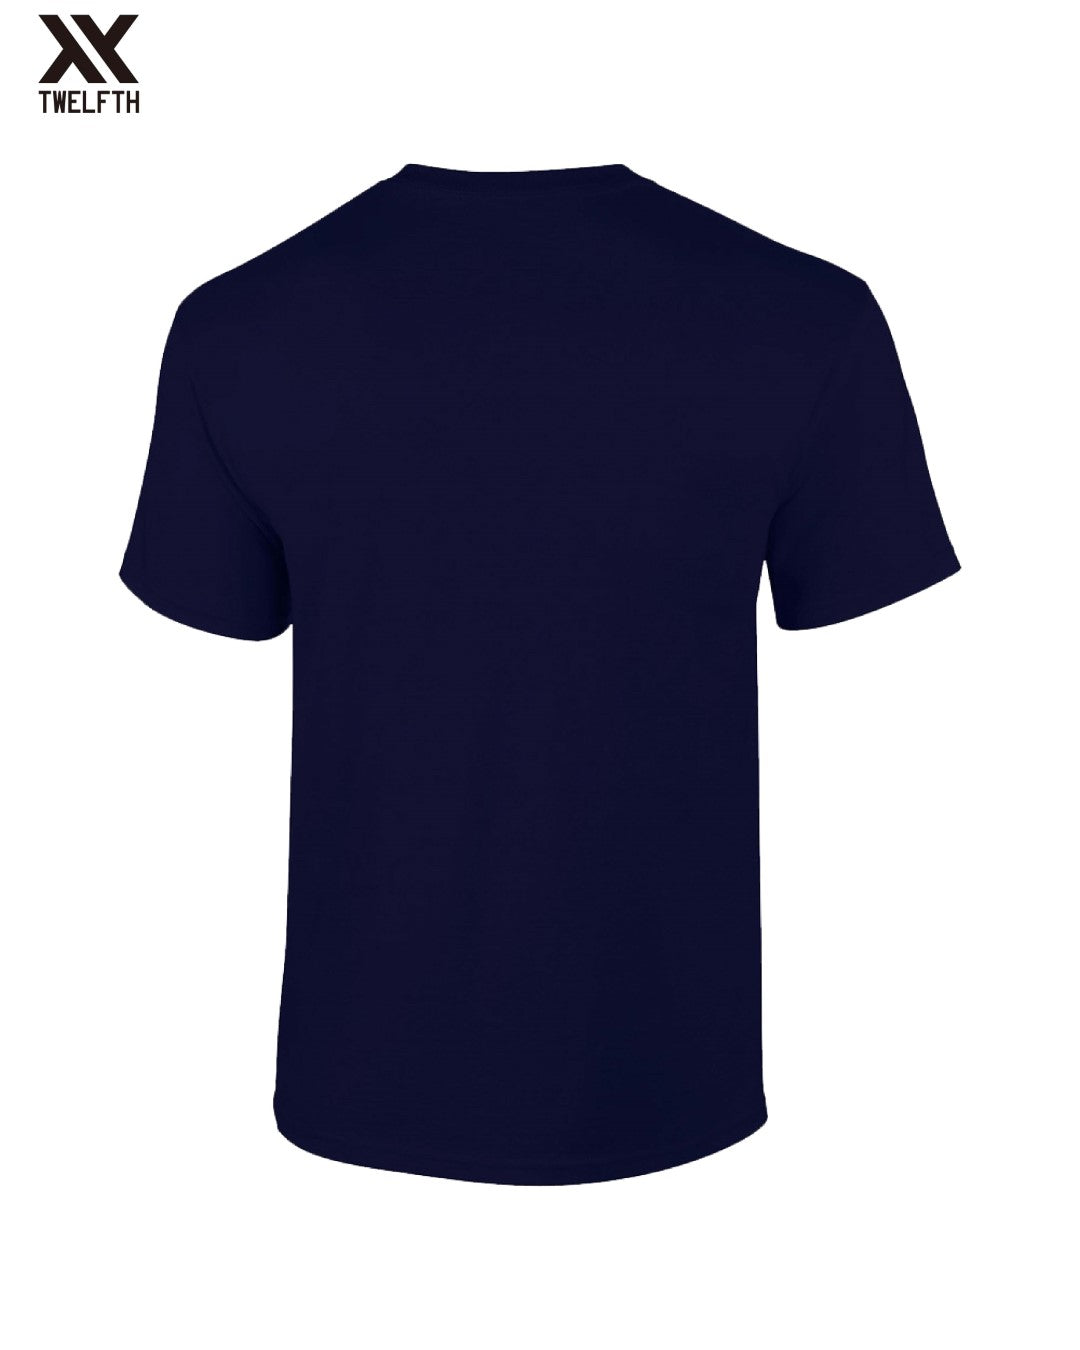 Montpellier Crest T-Shirt - Mens